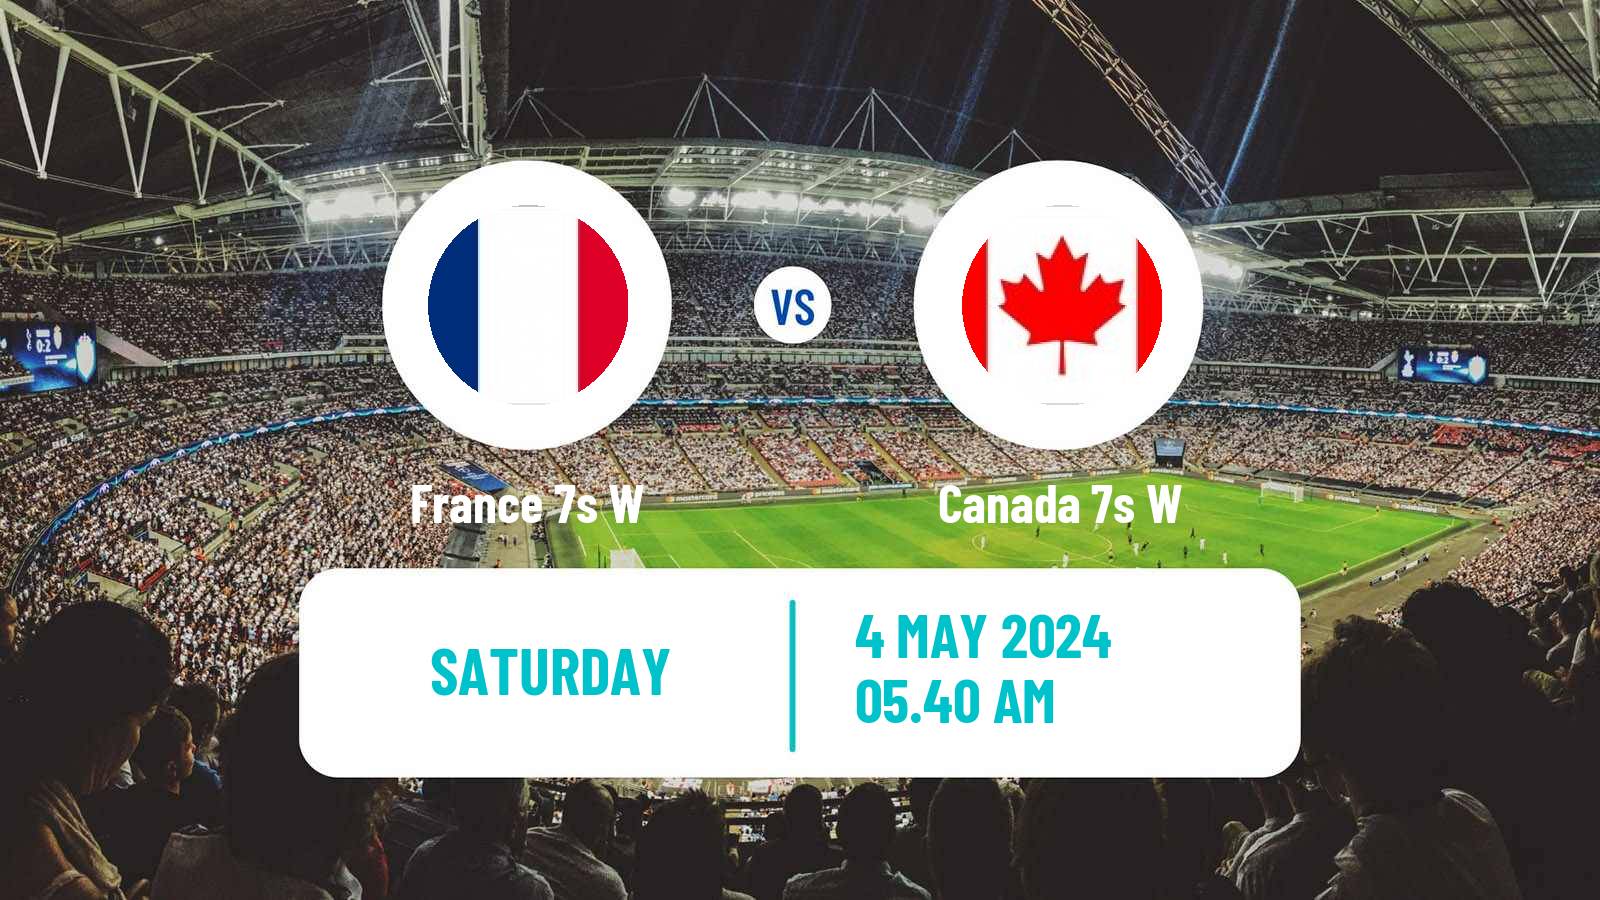 Soccer Sevens World Series Women - Singapore France 7s W - Canada 7s W